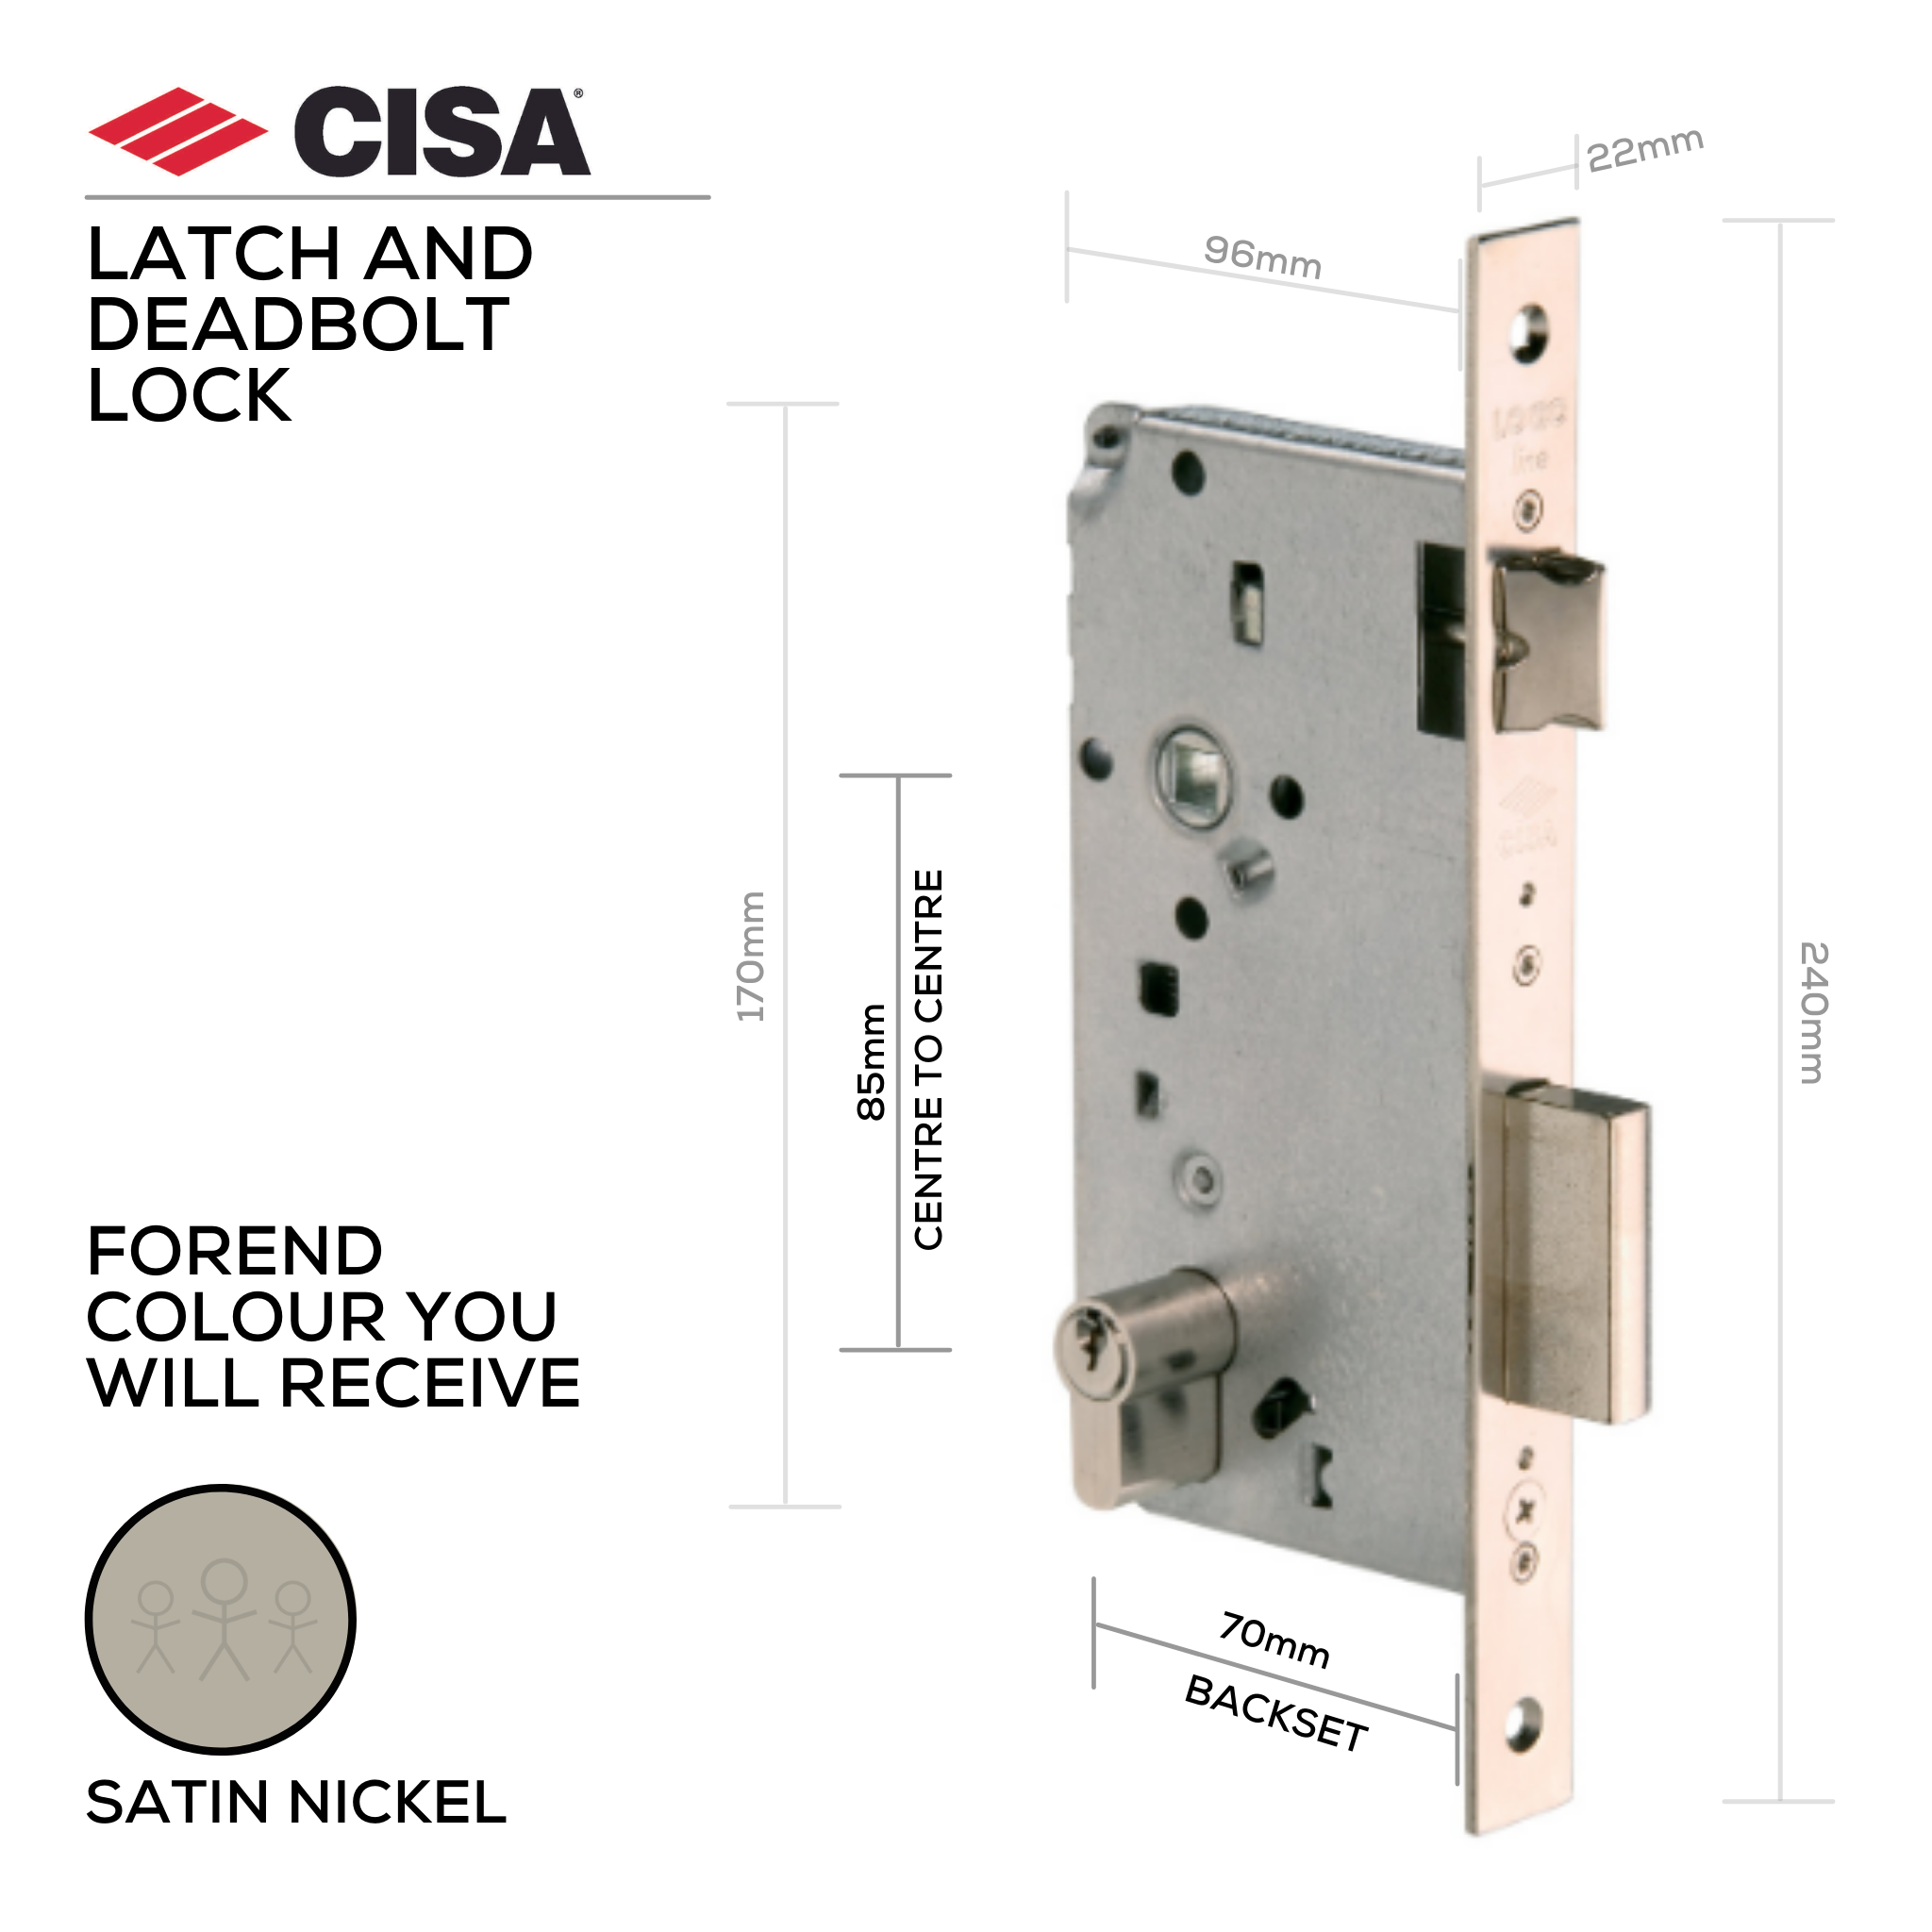 5C611-70-12, Latch & Deadbolt Lock, Euro Cylinder, Excluding Cylinder, 70mm (Backset), 85mm (ctc), Satin Nickel, CISA